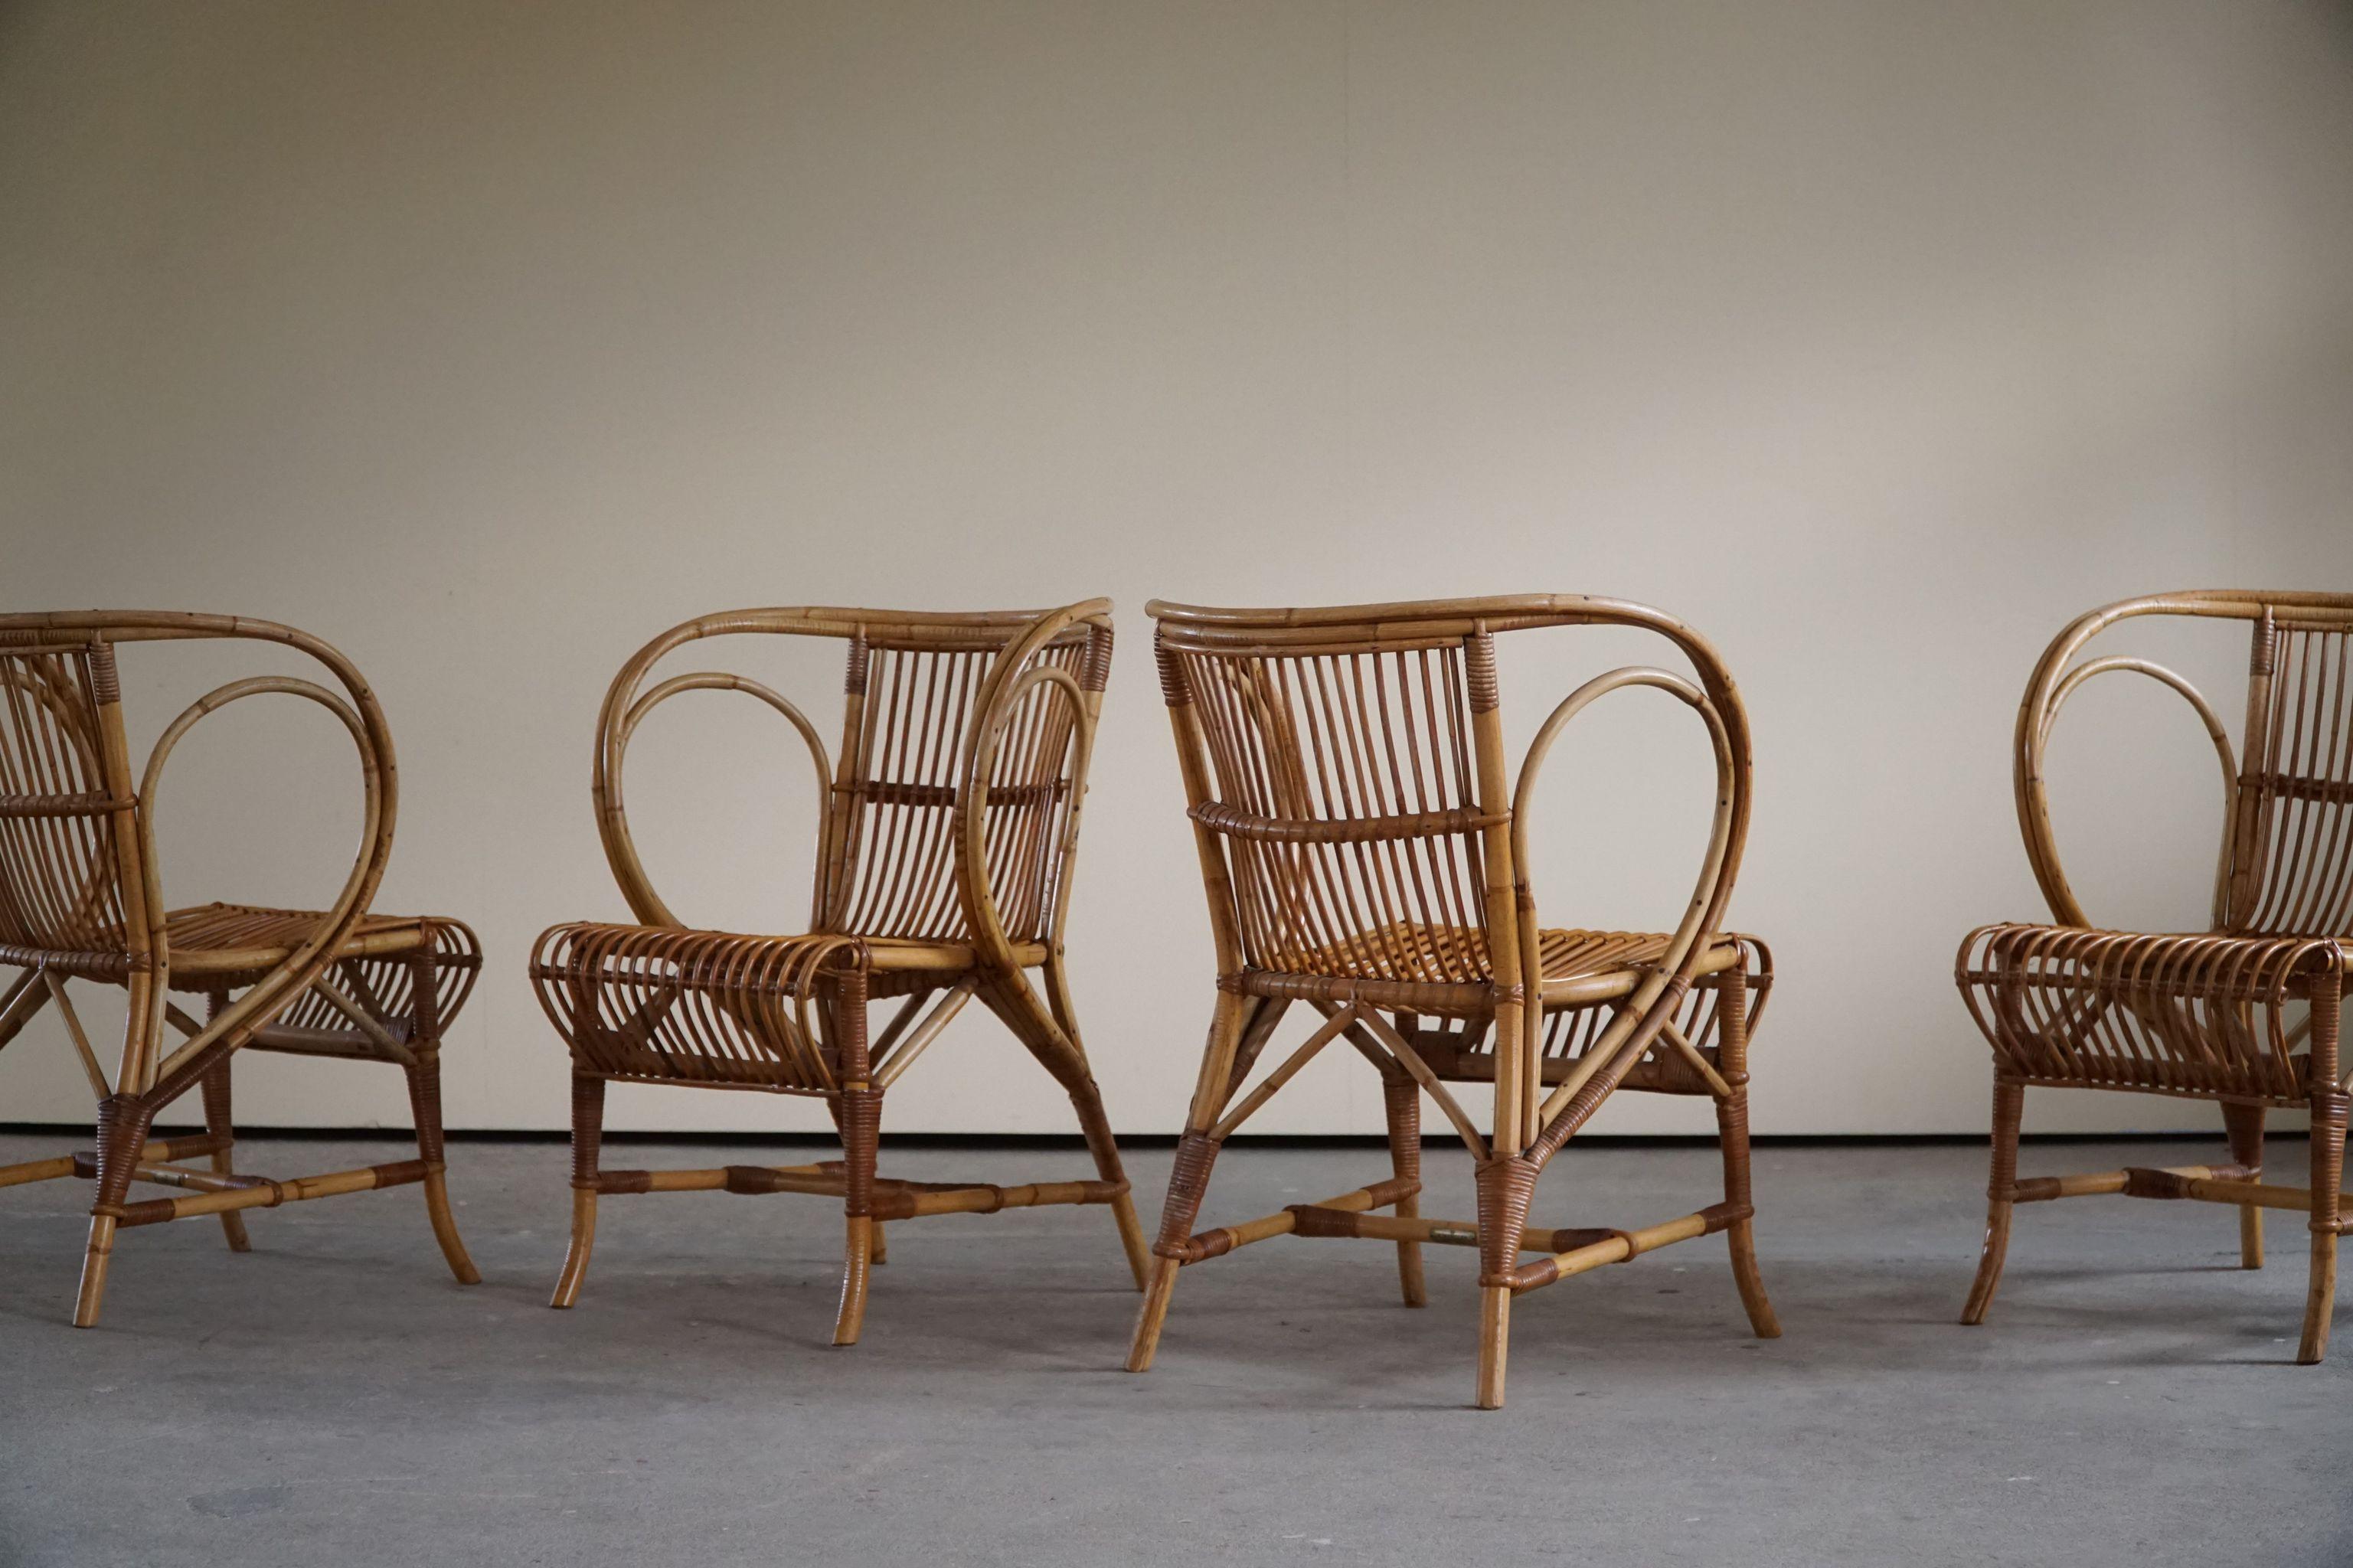 Scandinavian Modern Mid-Century Danish Dining Chairs in Wicker, by Robert Wengler, Set of 4, 1960s